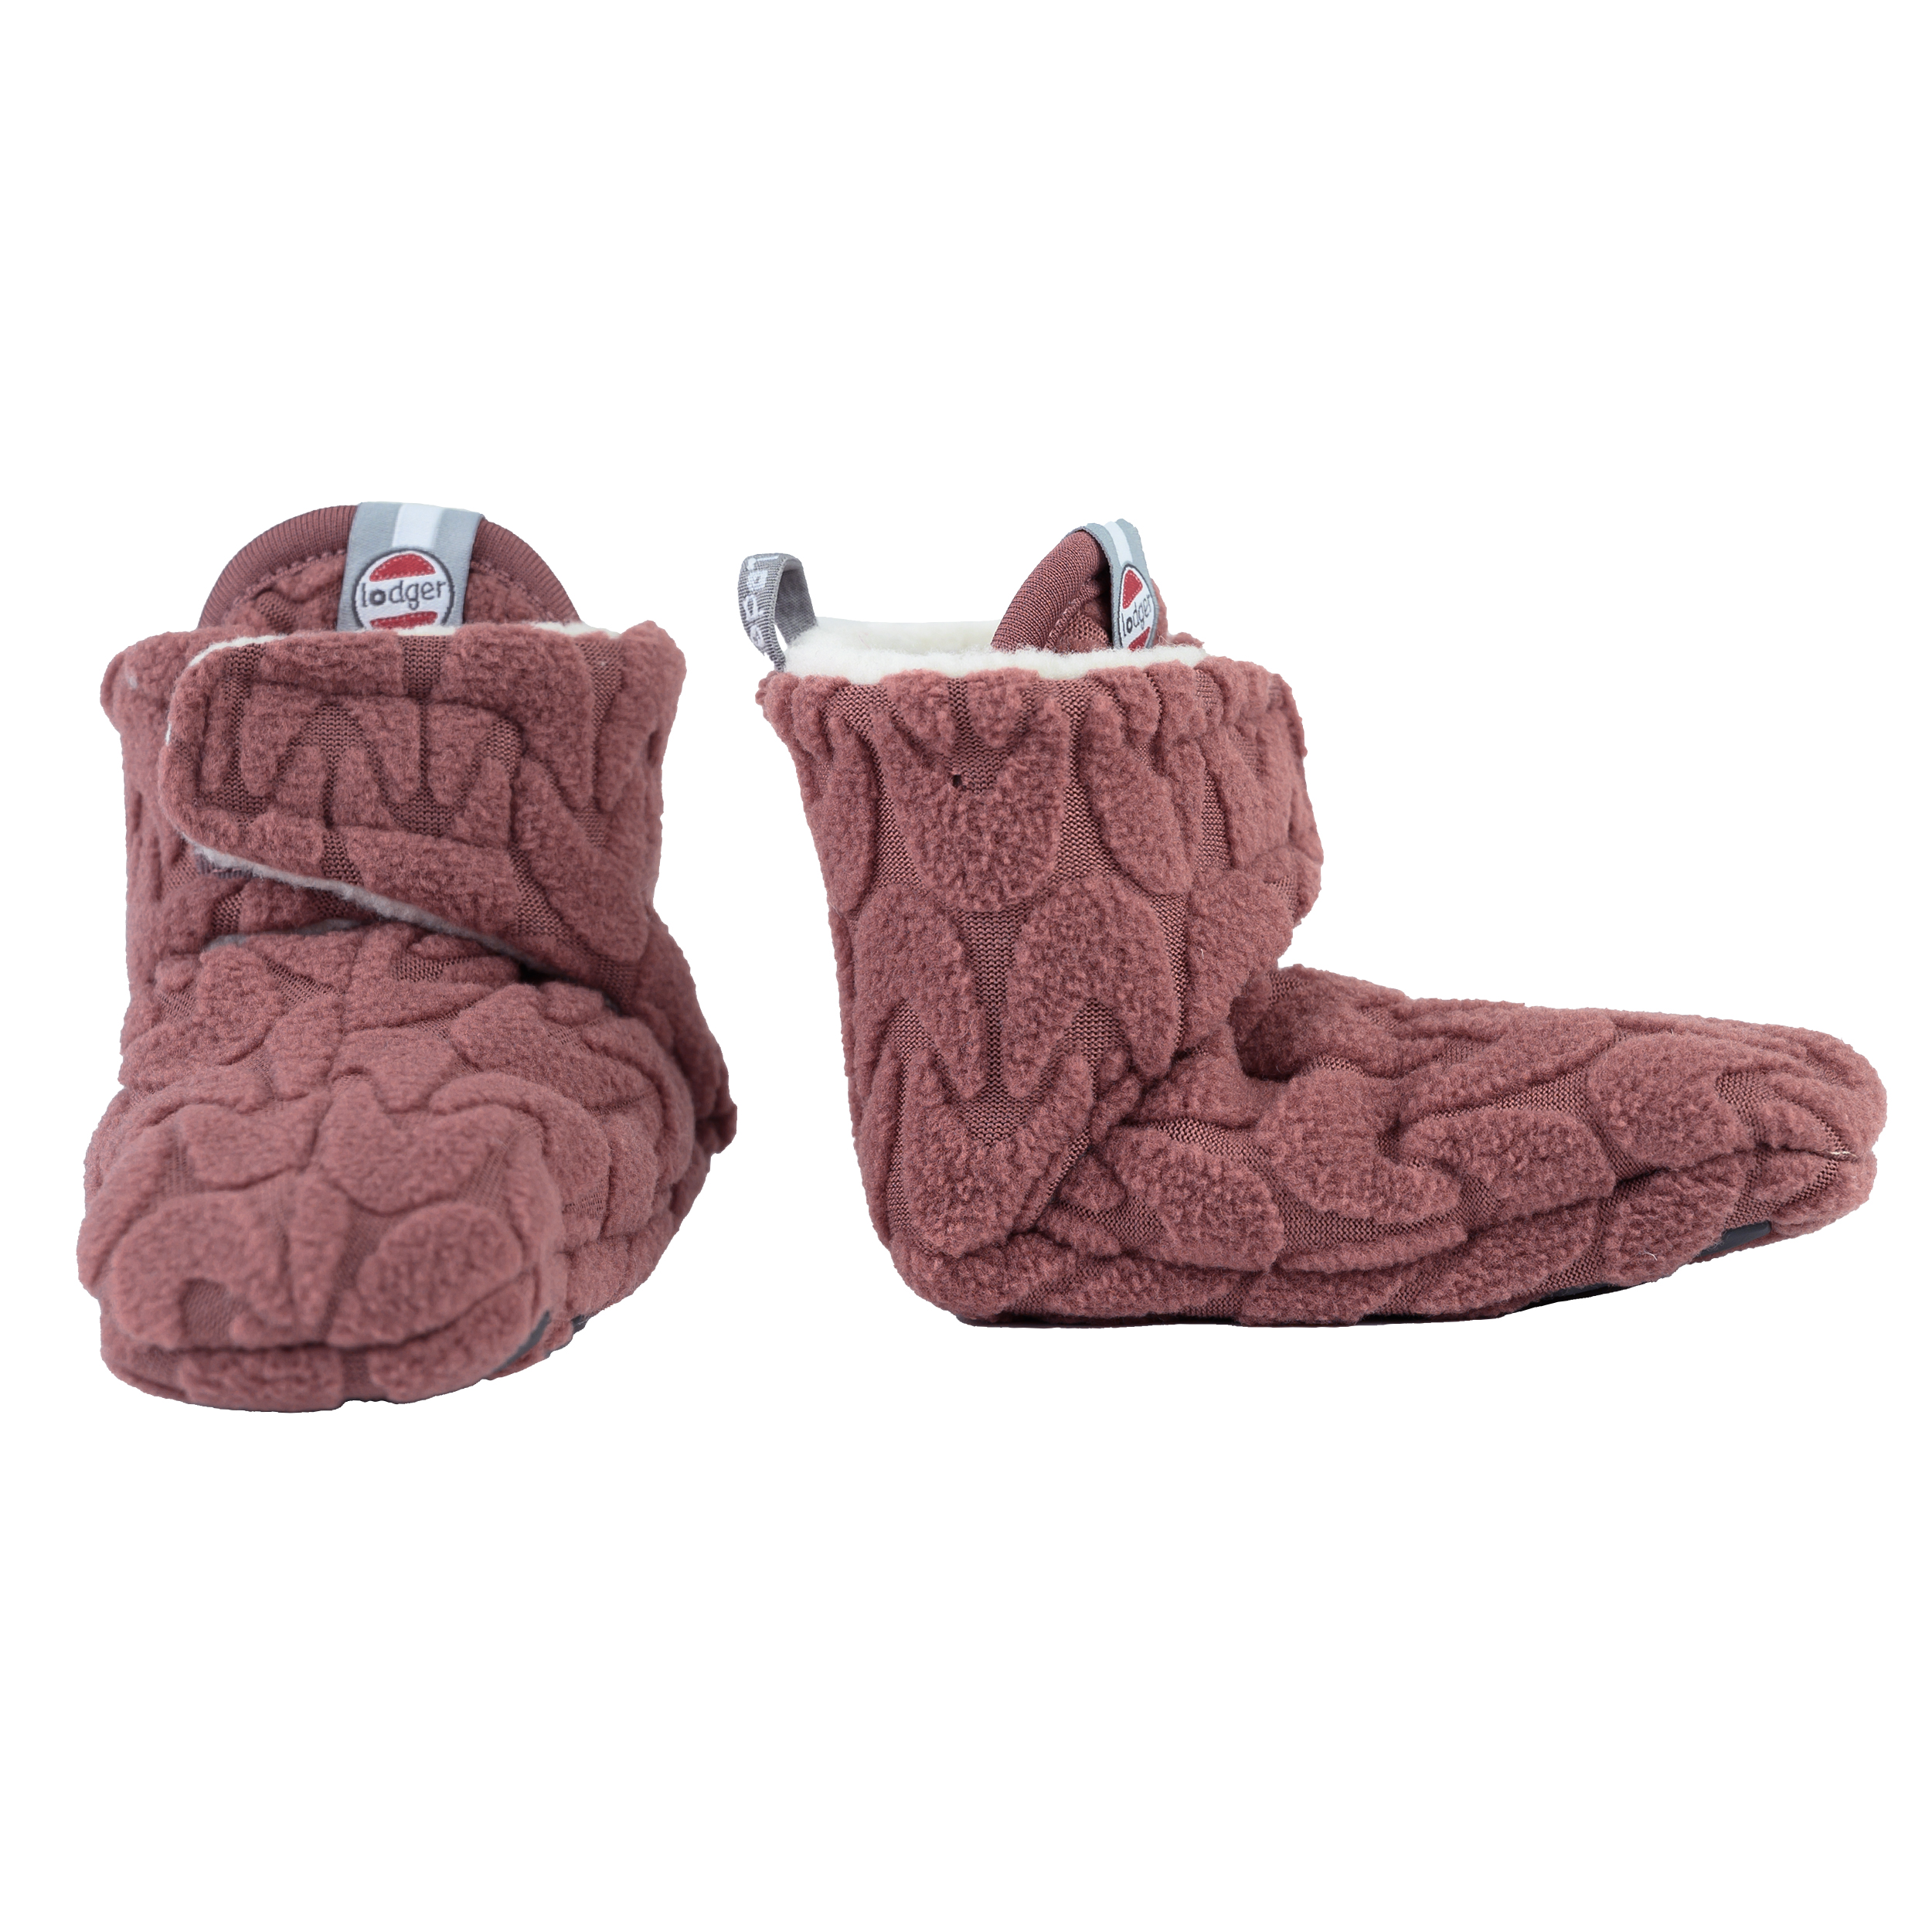 baby velcro slippers